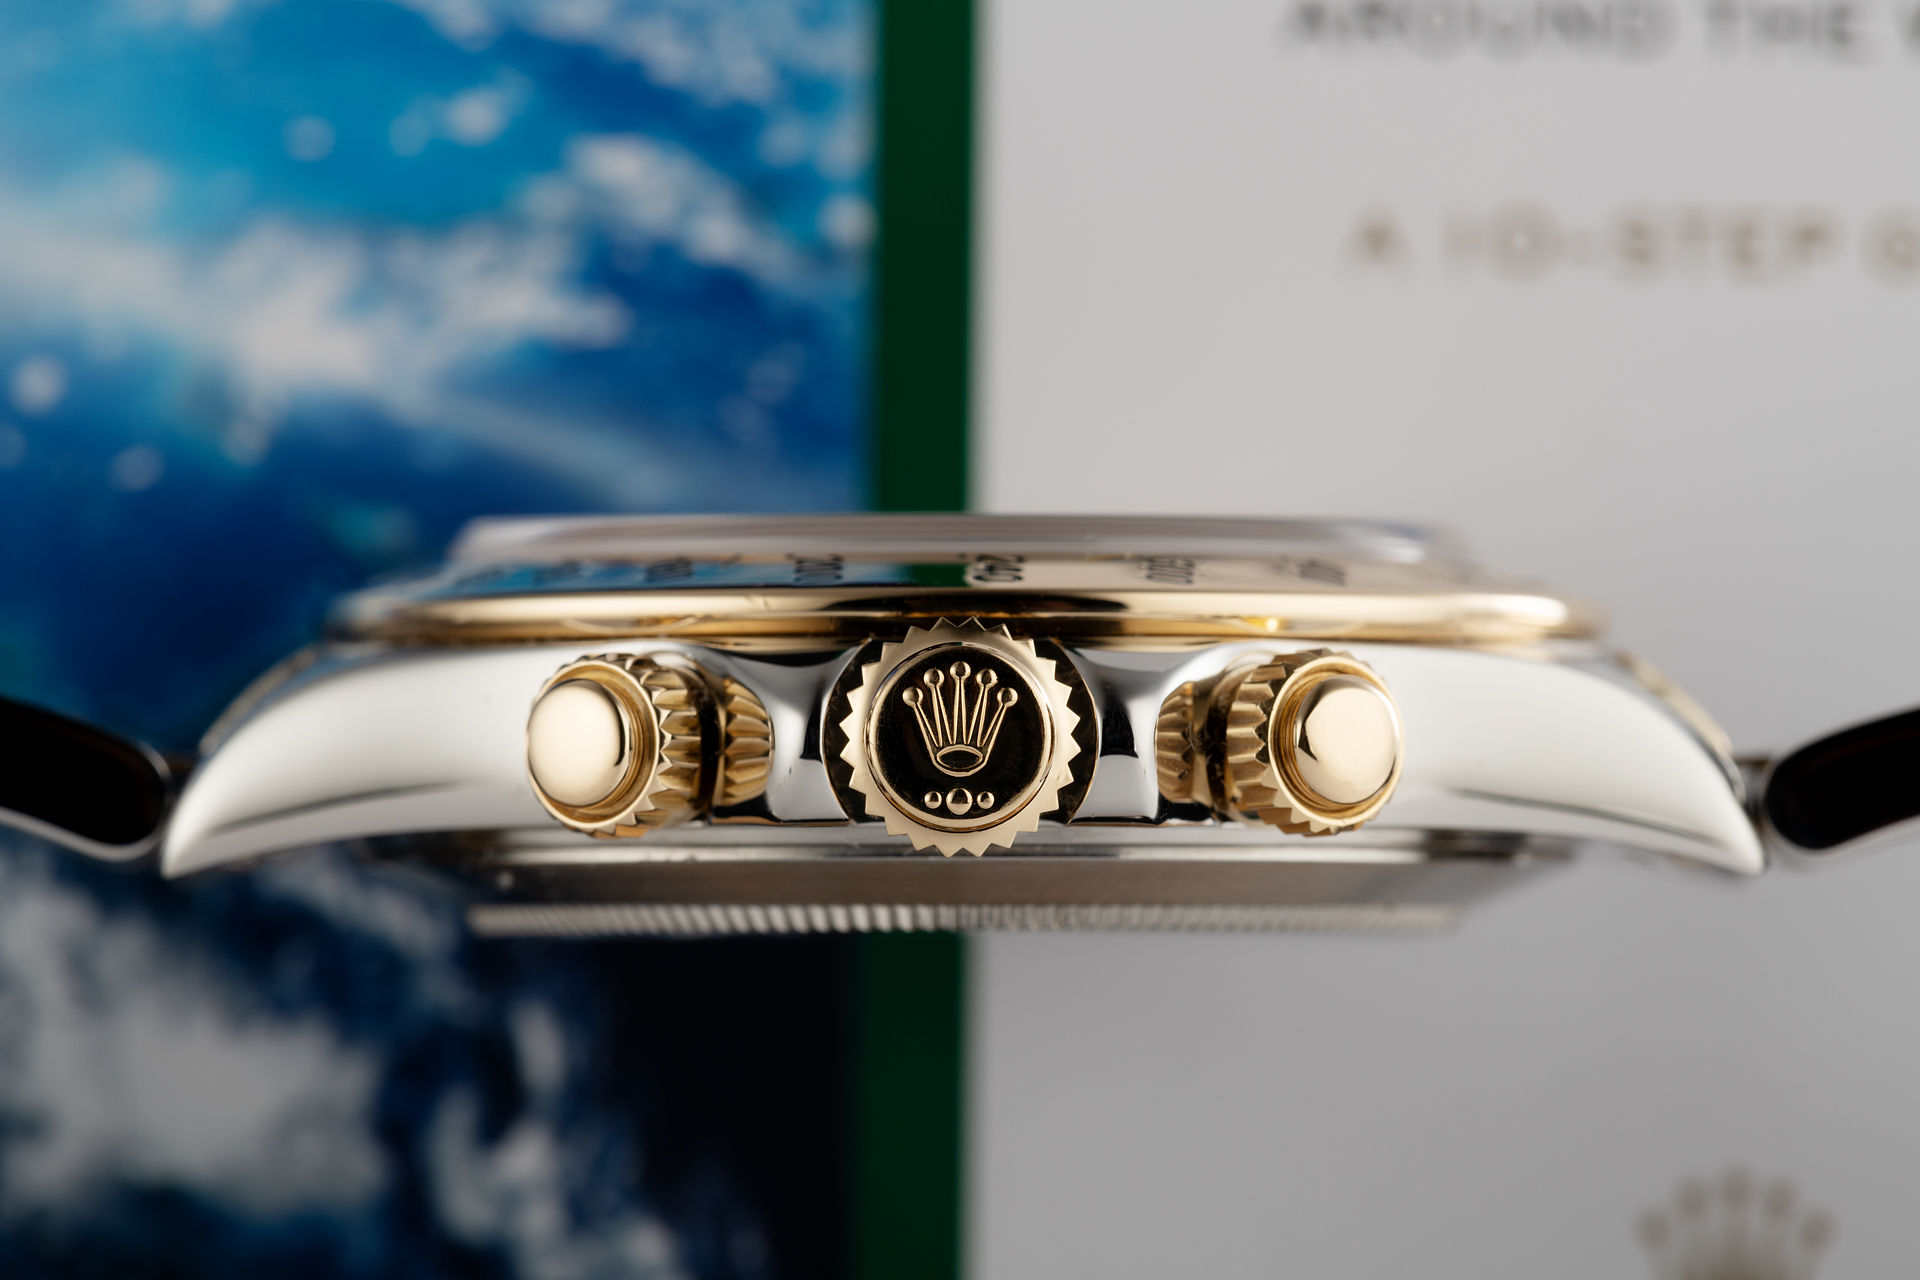 ref 16523 | Gold & Steel 'Upside Down Six' Rolex Warranty | Rolex Cosmograph Daytona